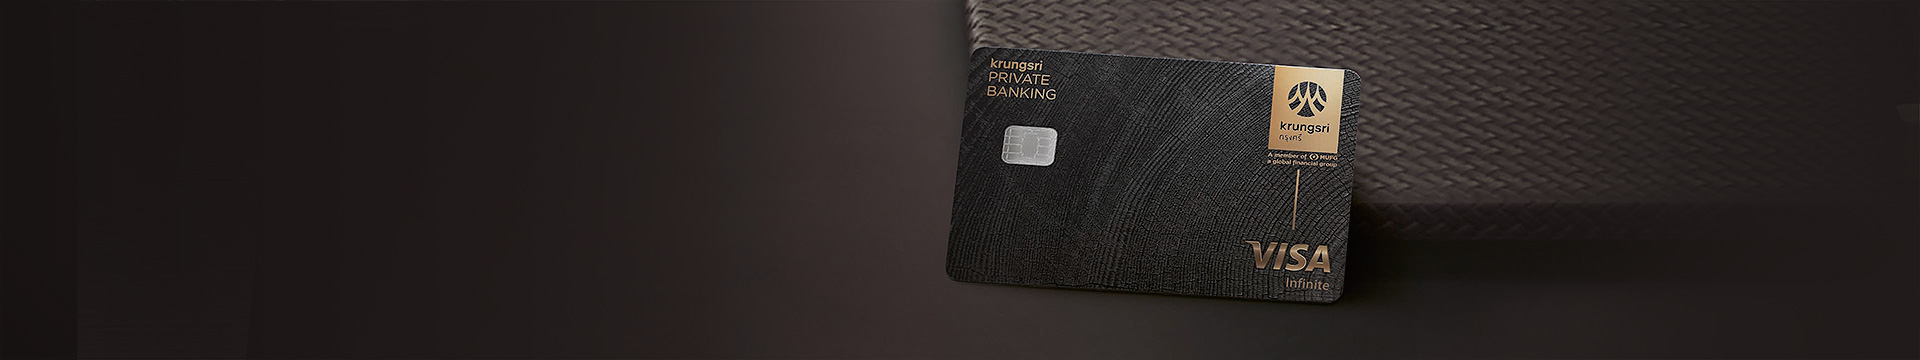 service-money-05-card-visa